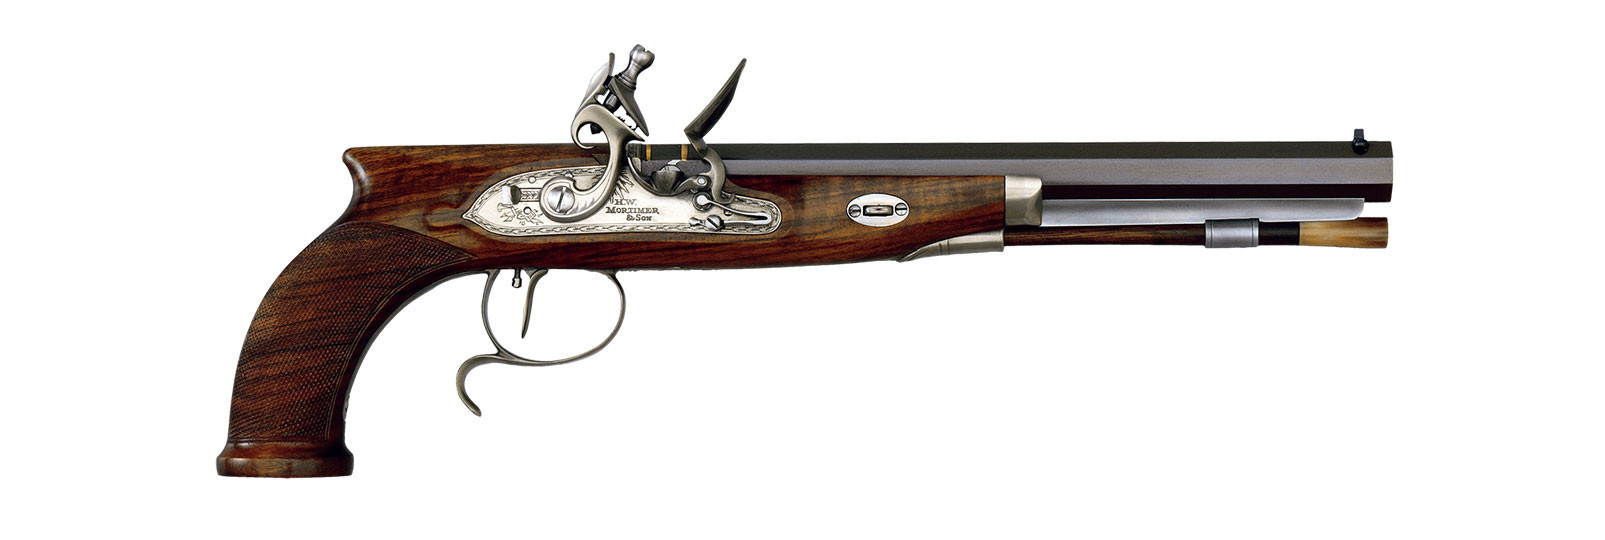 Mortimer Pistol DELUXE flintlock model